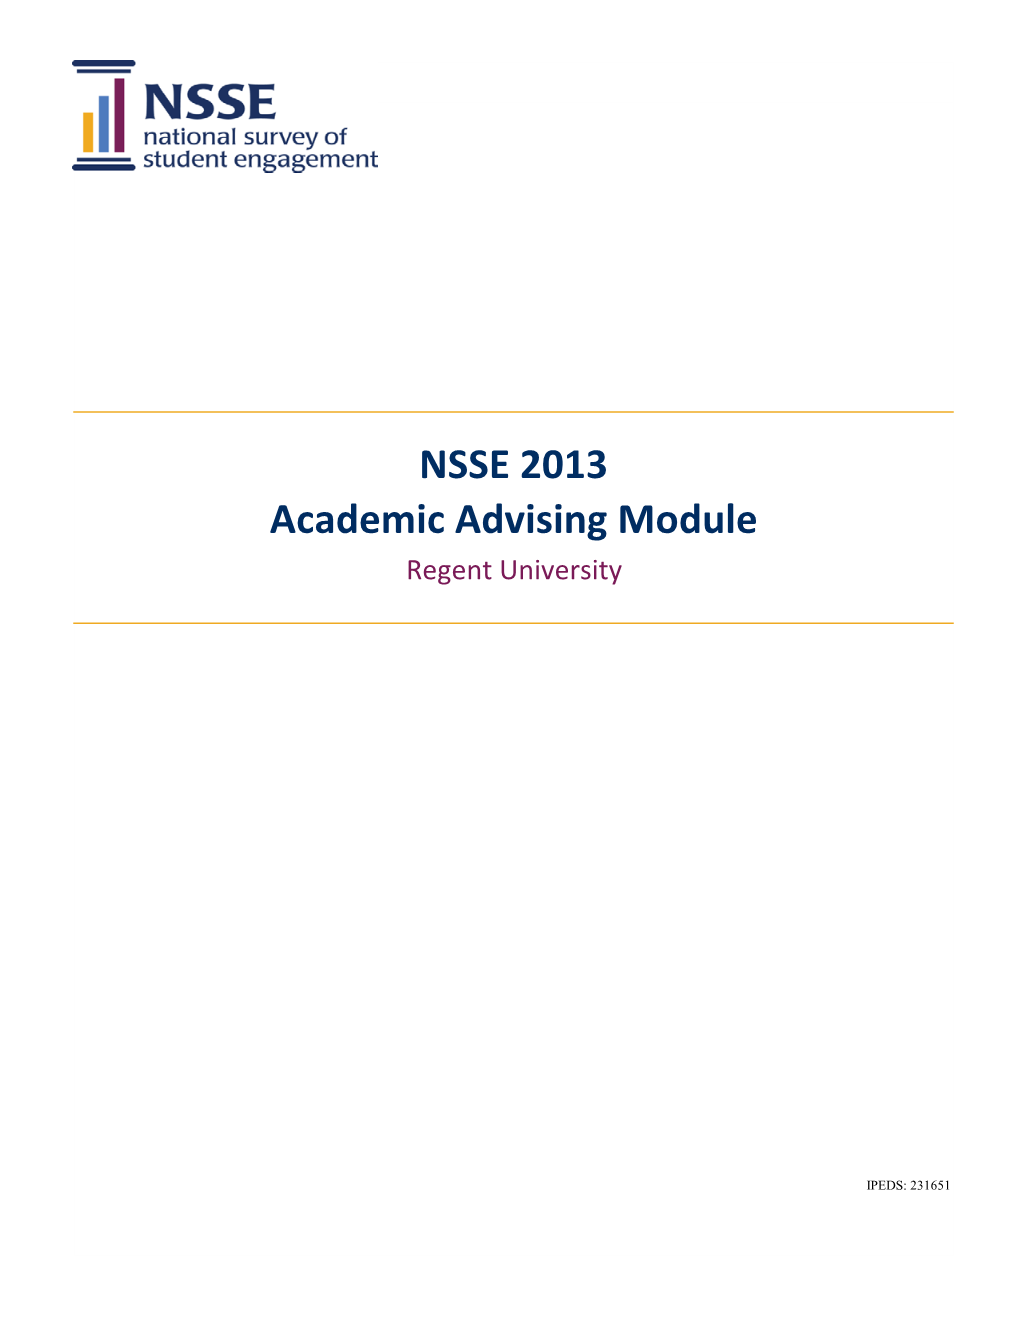 NSSE 2013 Academic Advising Module Regent University